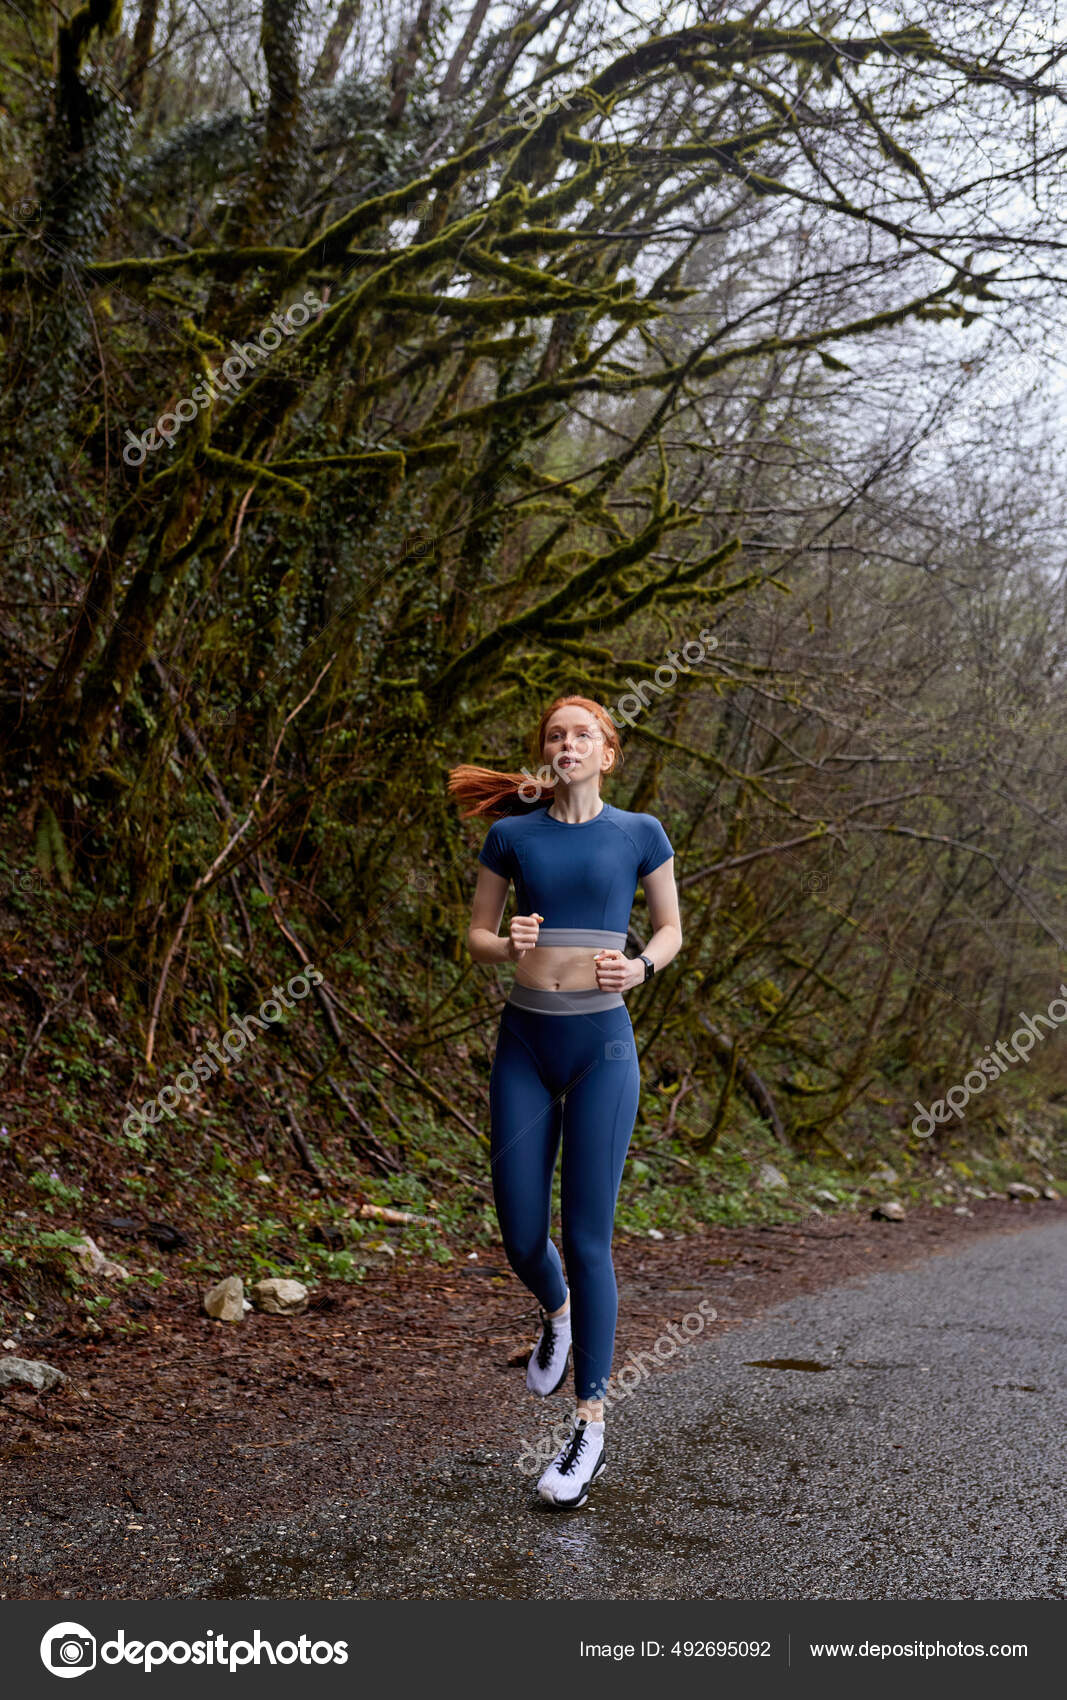 https://st2.depositphotos.com/32281612/49269/i/1600/depositphotos_492695092-stock-photo-running-woman-redhead-female-runner.jpg